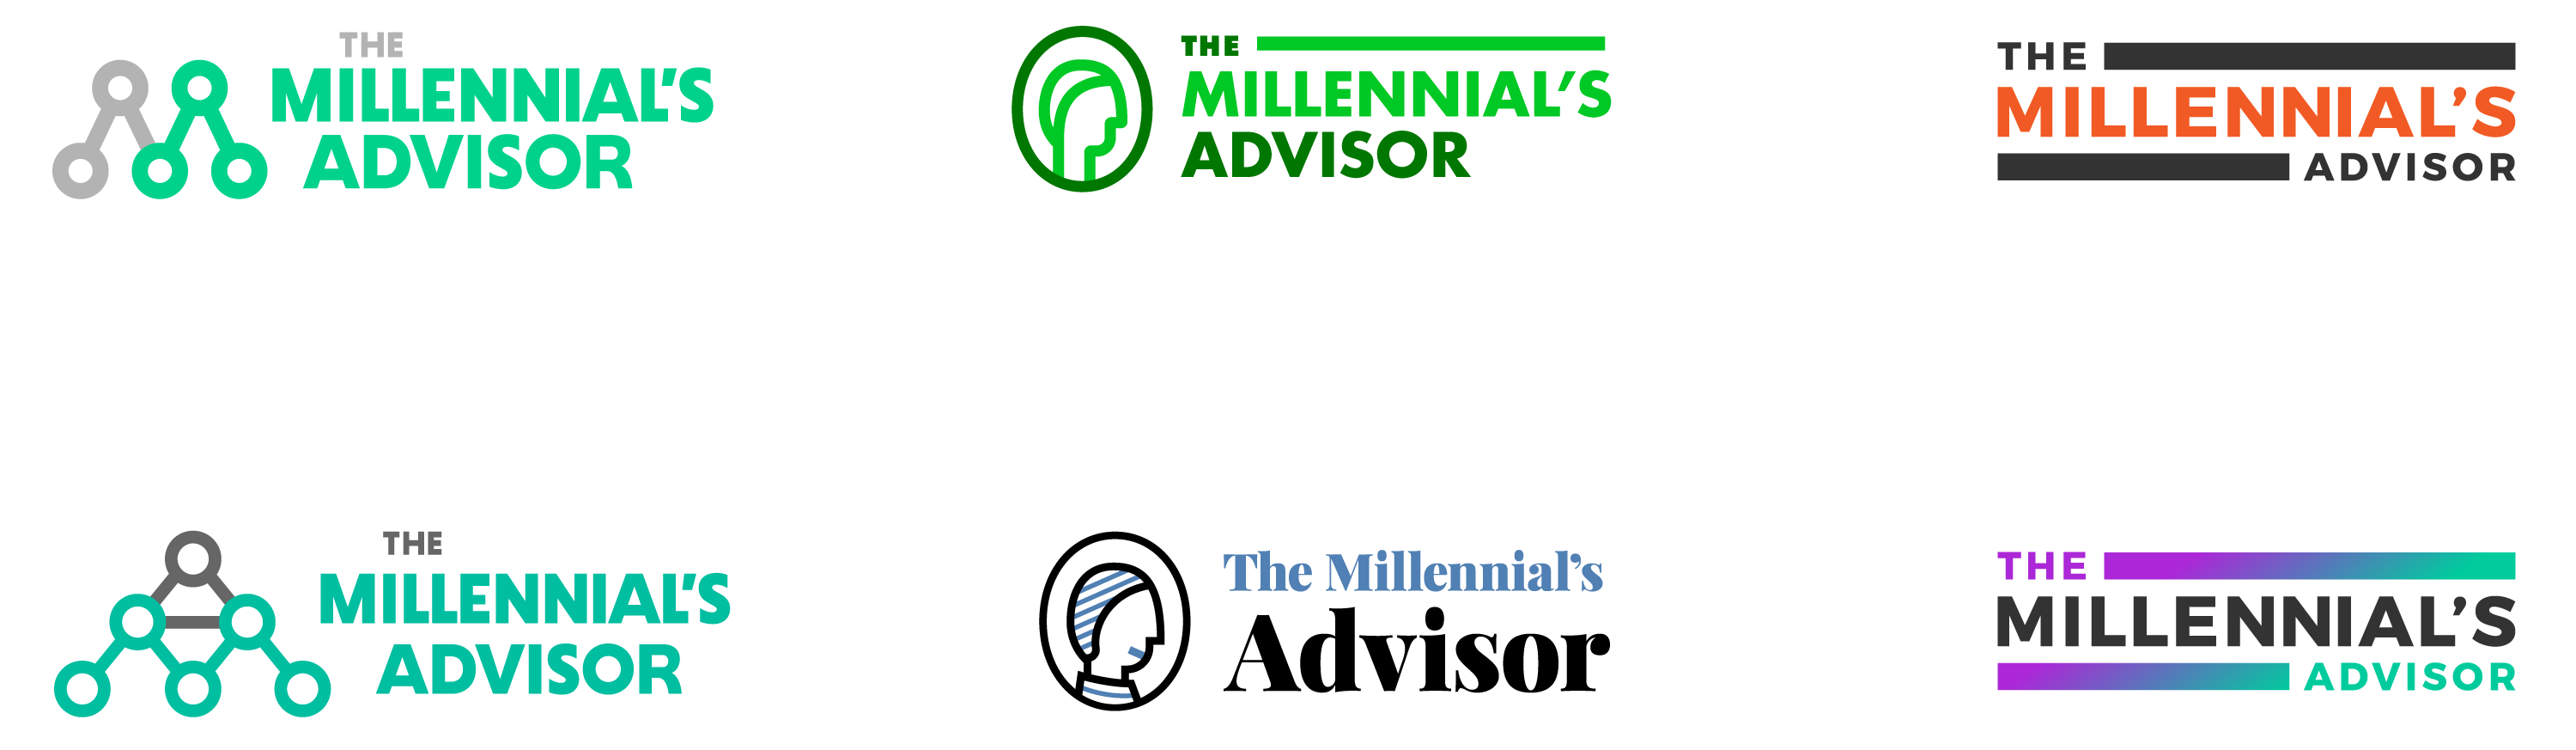 The Millennial's Advisor